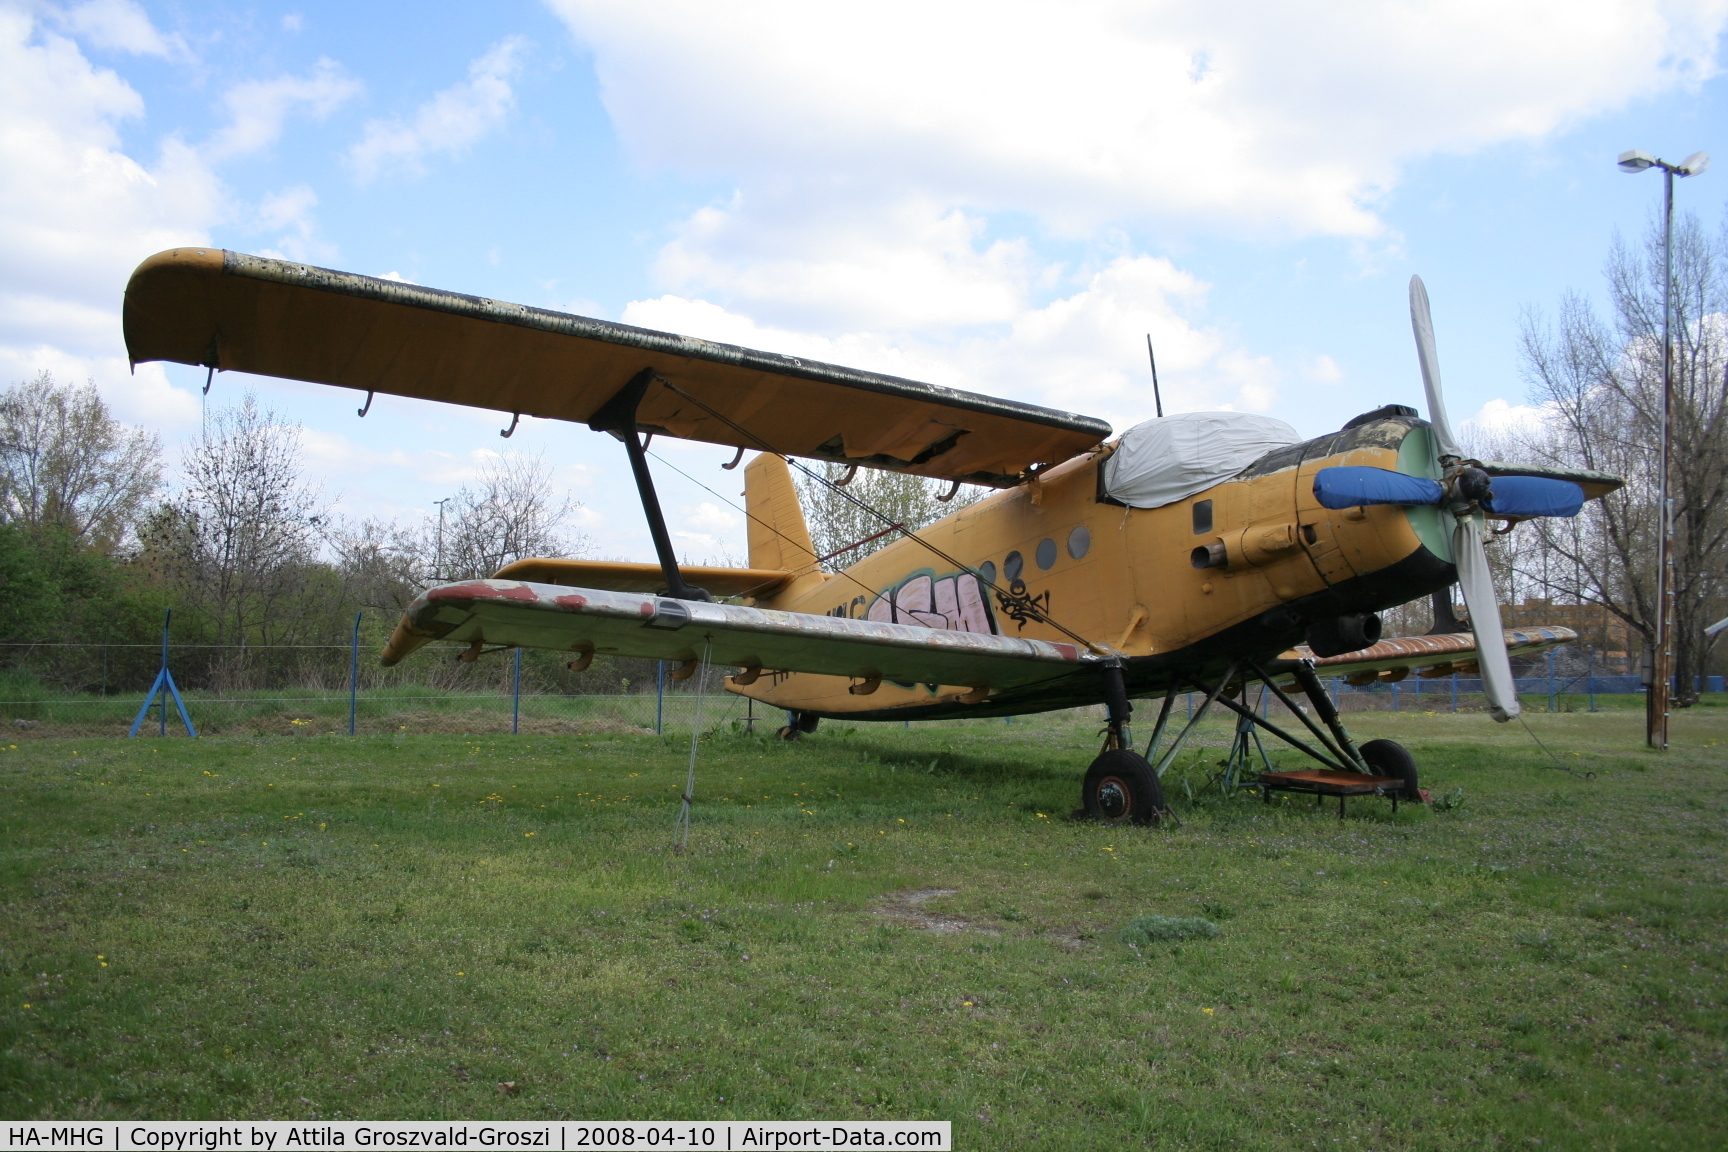 HA-MHG, 1967 Antonov An-2M C/N 601220, Csepel, Lajos Kossuth Grammar school apprentice workshop's yard - Hungary